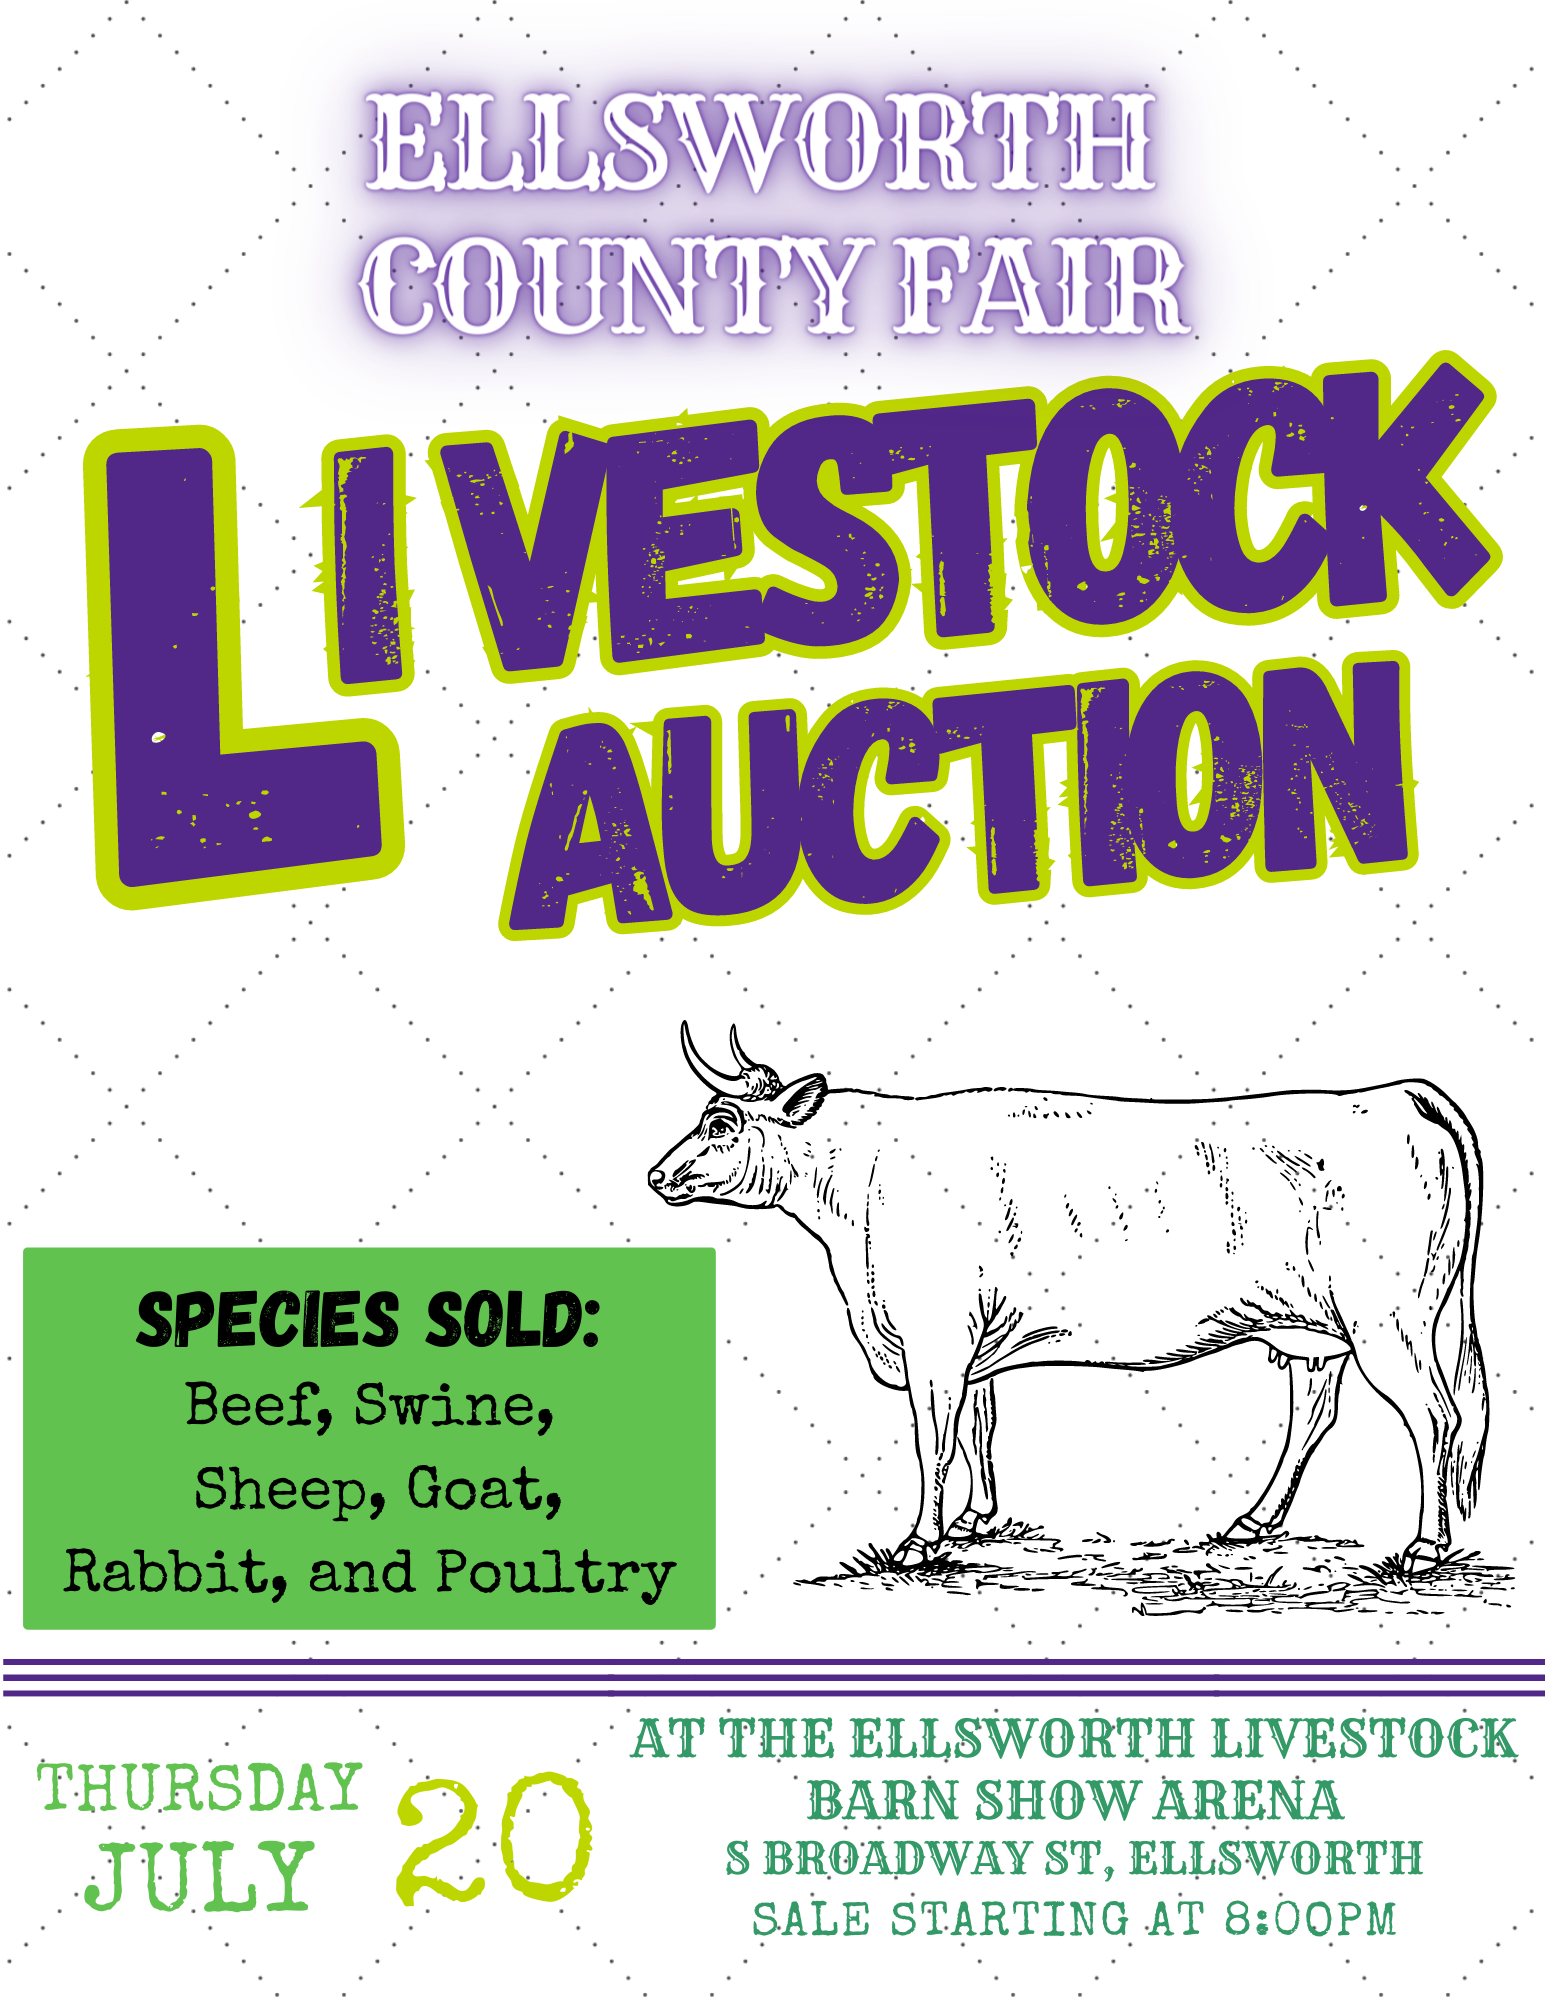 Ellsworth Livestock Sale